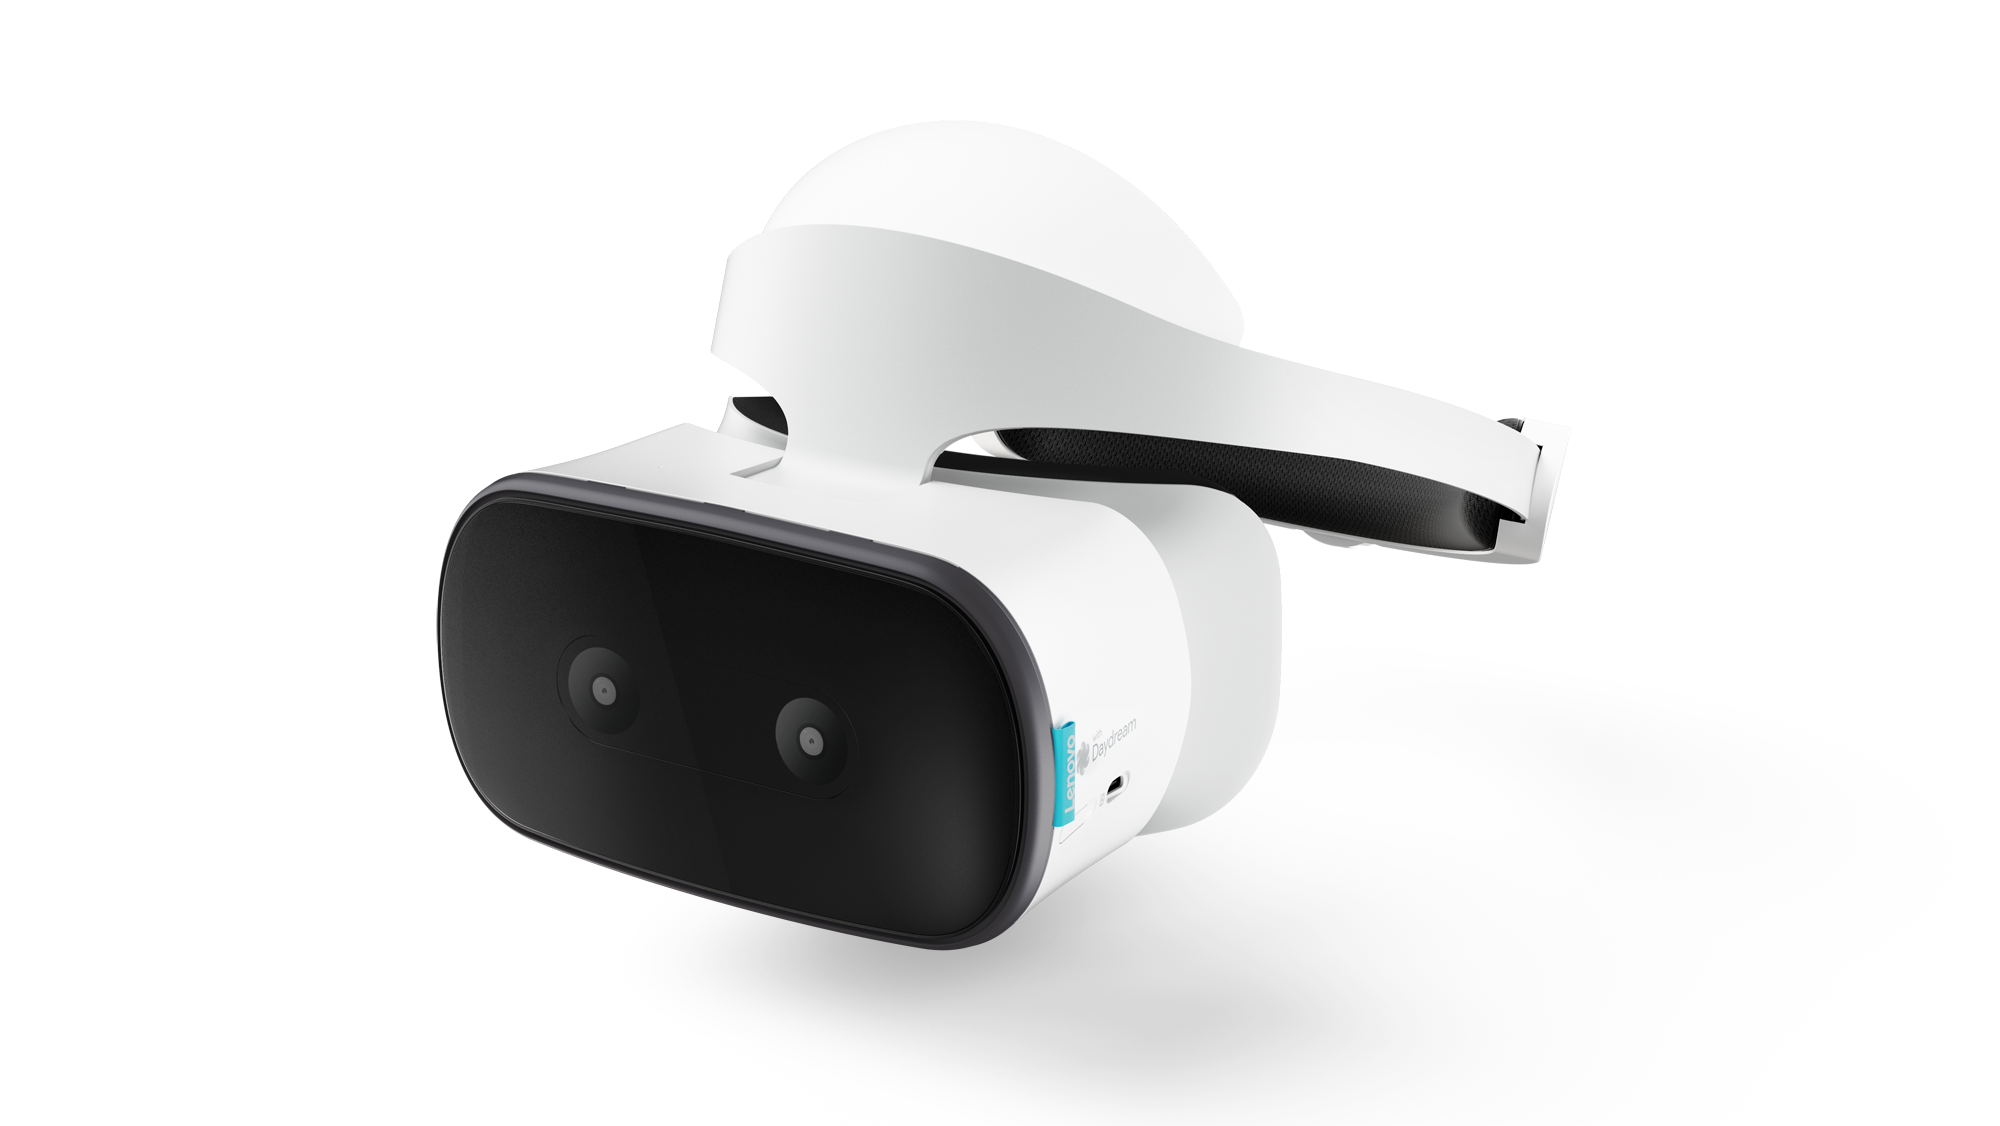 The Lenovo Mirage virtual reality headset (Courtesy of Lenovo)